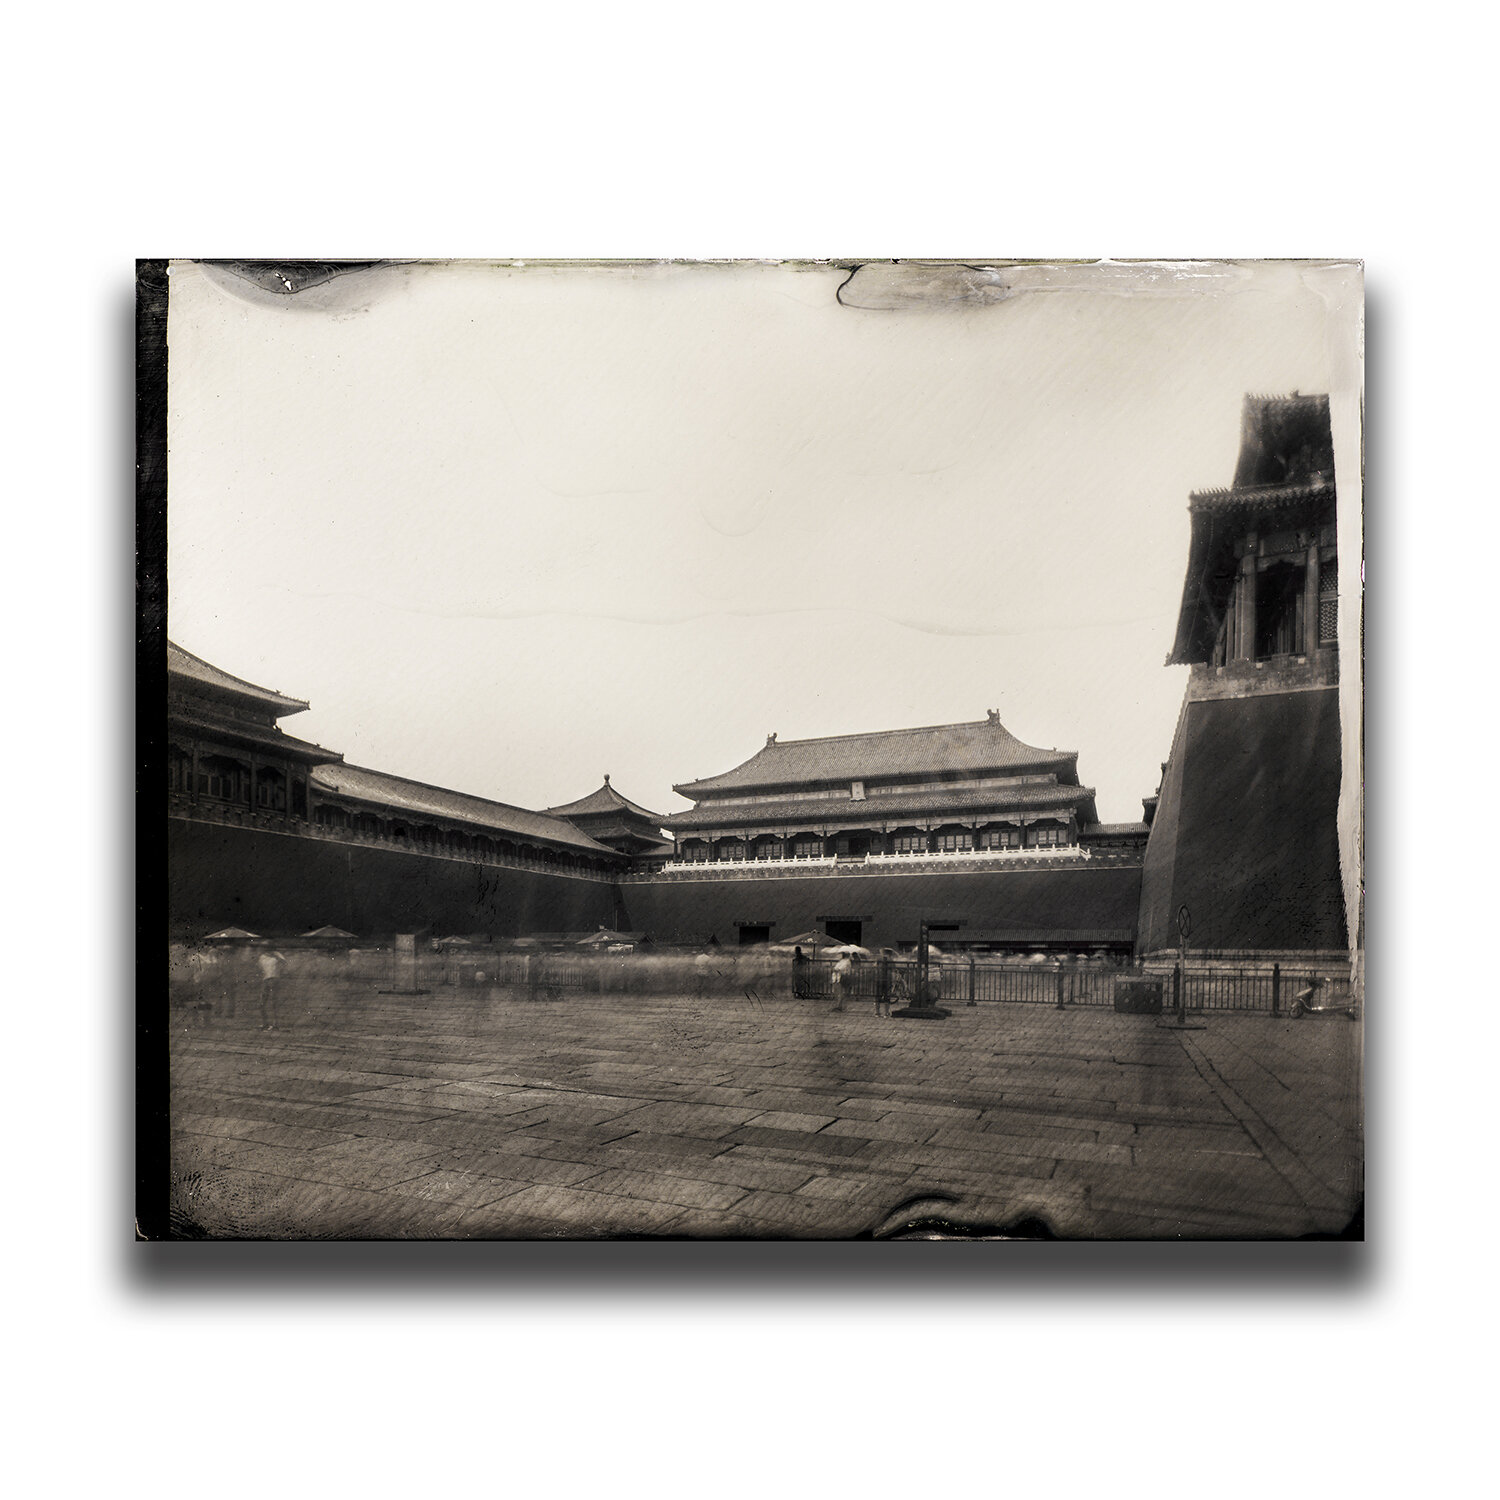 Forbidden City・Meridian Gate/紫禁城・午門/자금성・오문/北京故宮・午門